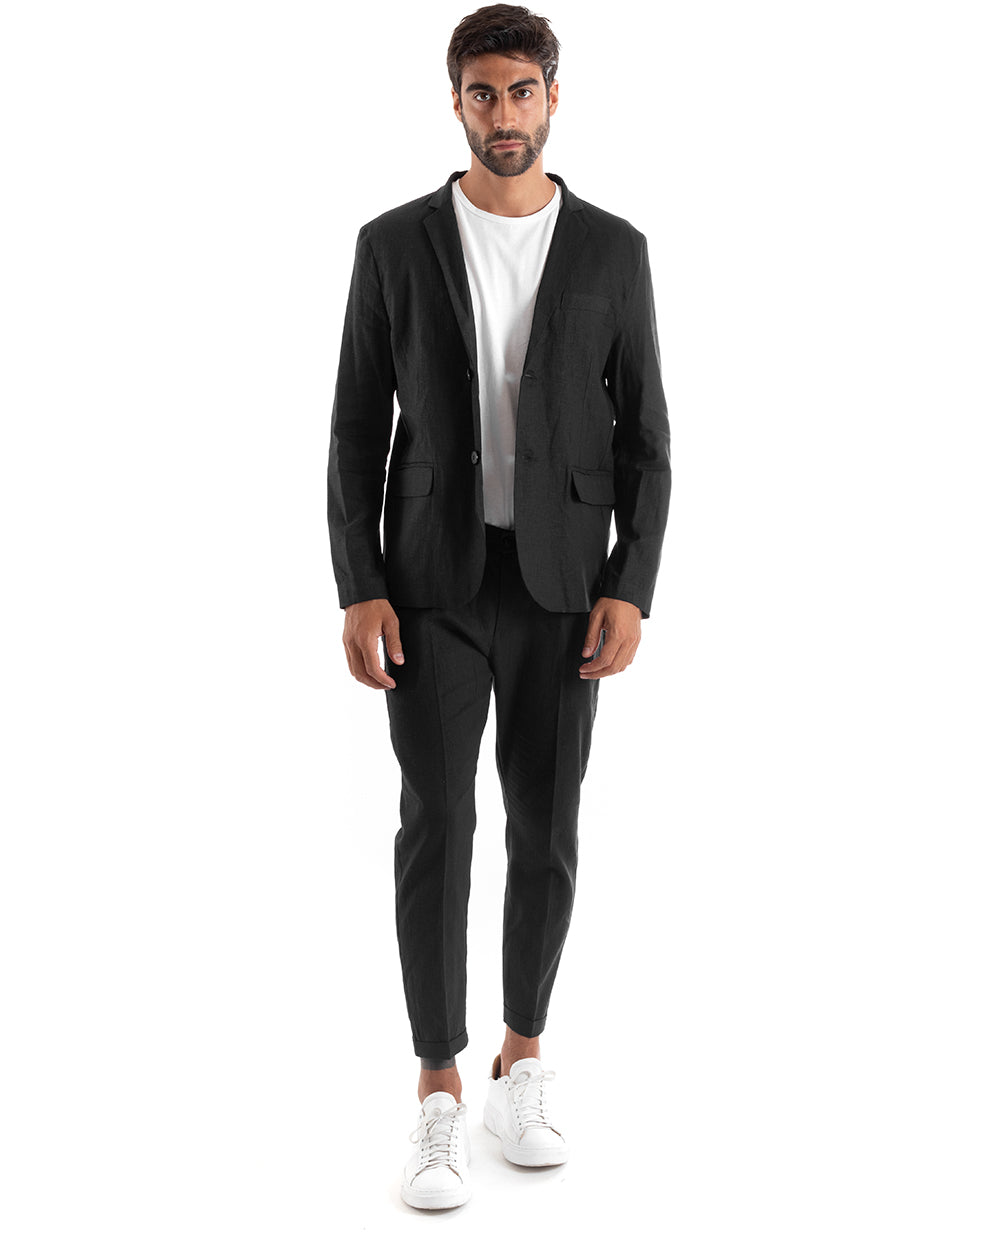 Single Breasted Men's Suit Linen Suit Suit Jacket Trousers Black Sporty Elegant Ceremony GIOSAL-OU2136A